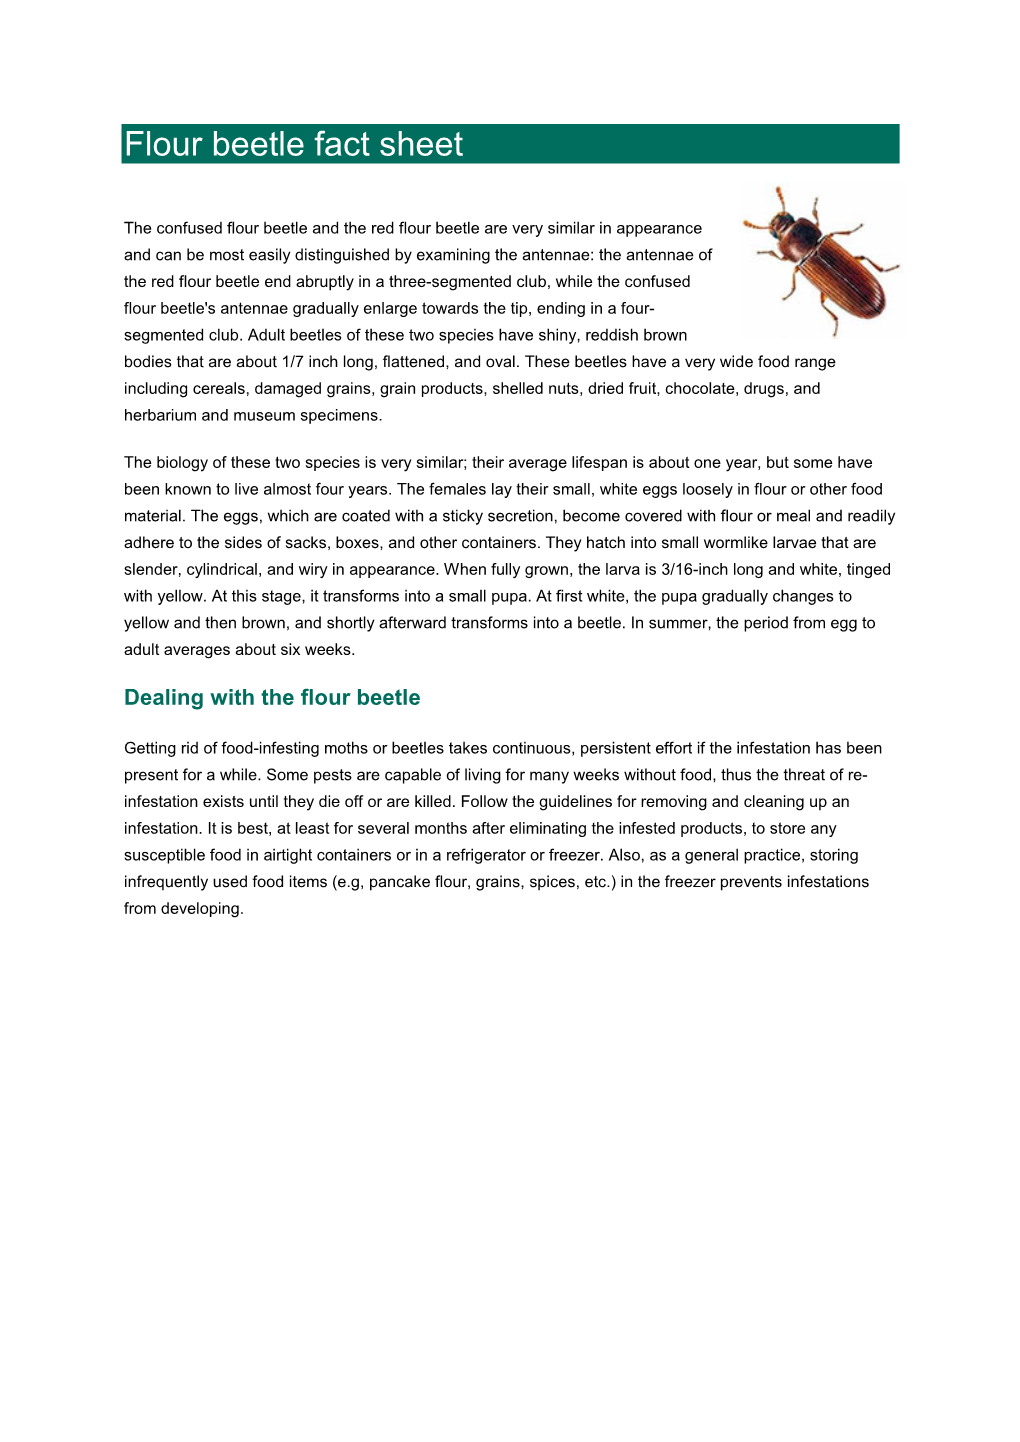 Flour Beetle Fact Sheet